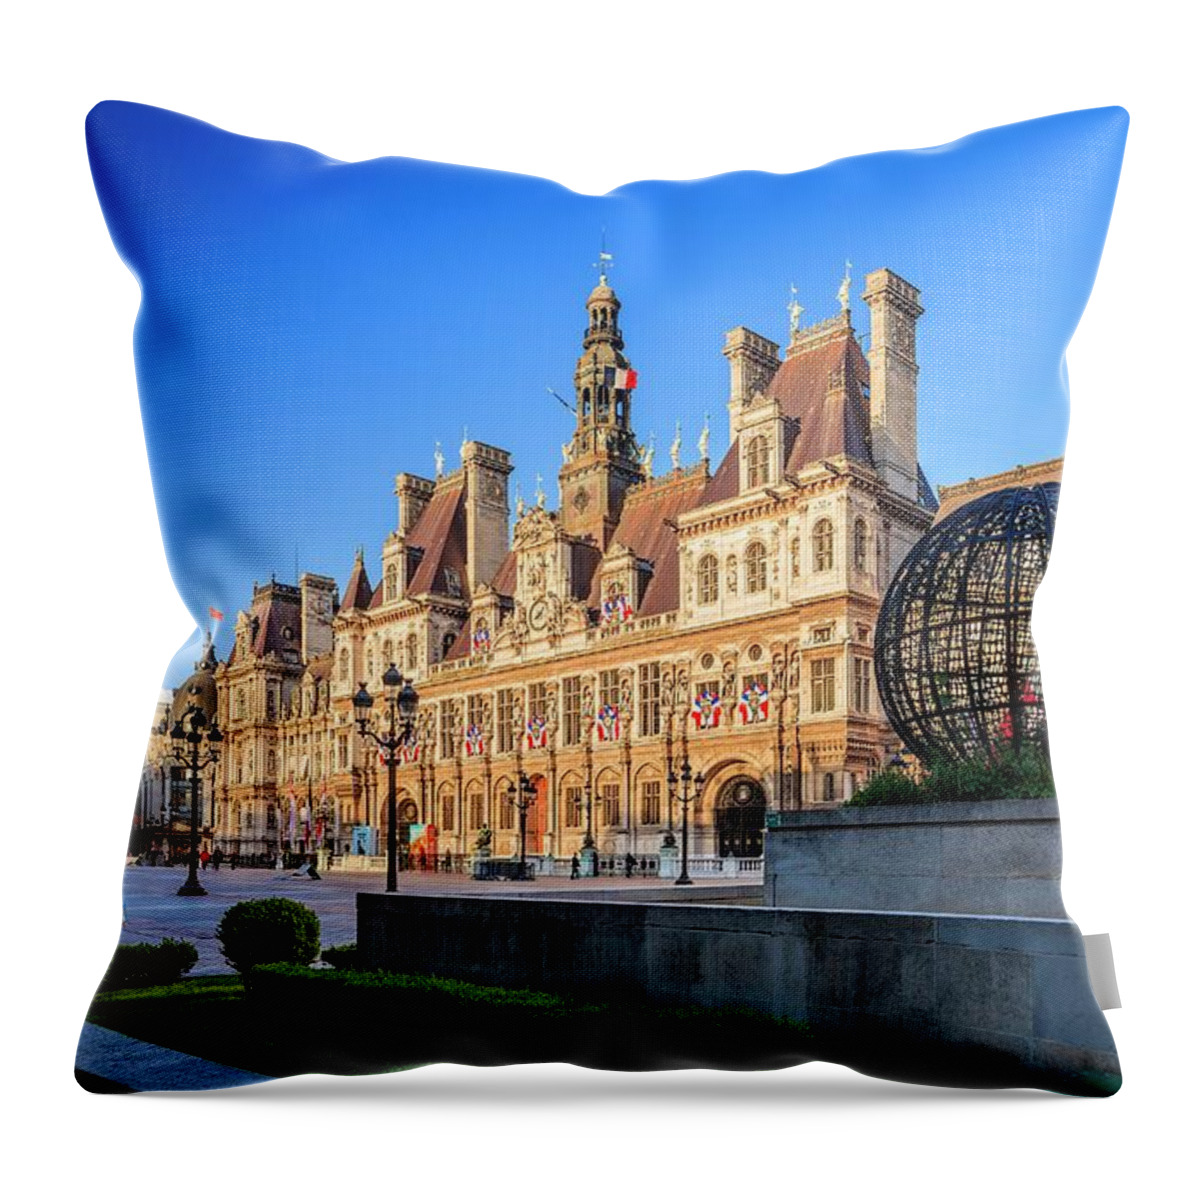 Estock Throw Pillow featuring the digital art City Of Paris by Alessandro Saffo